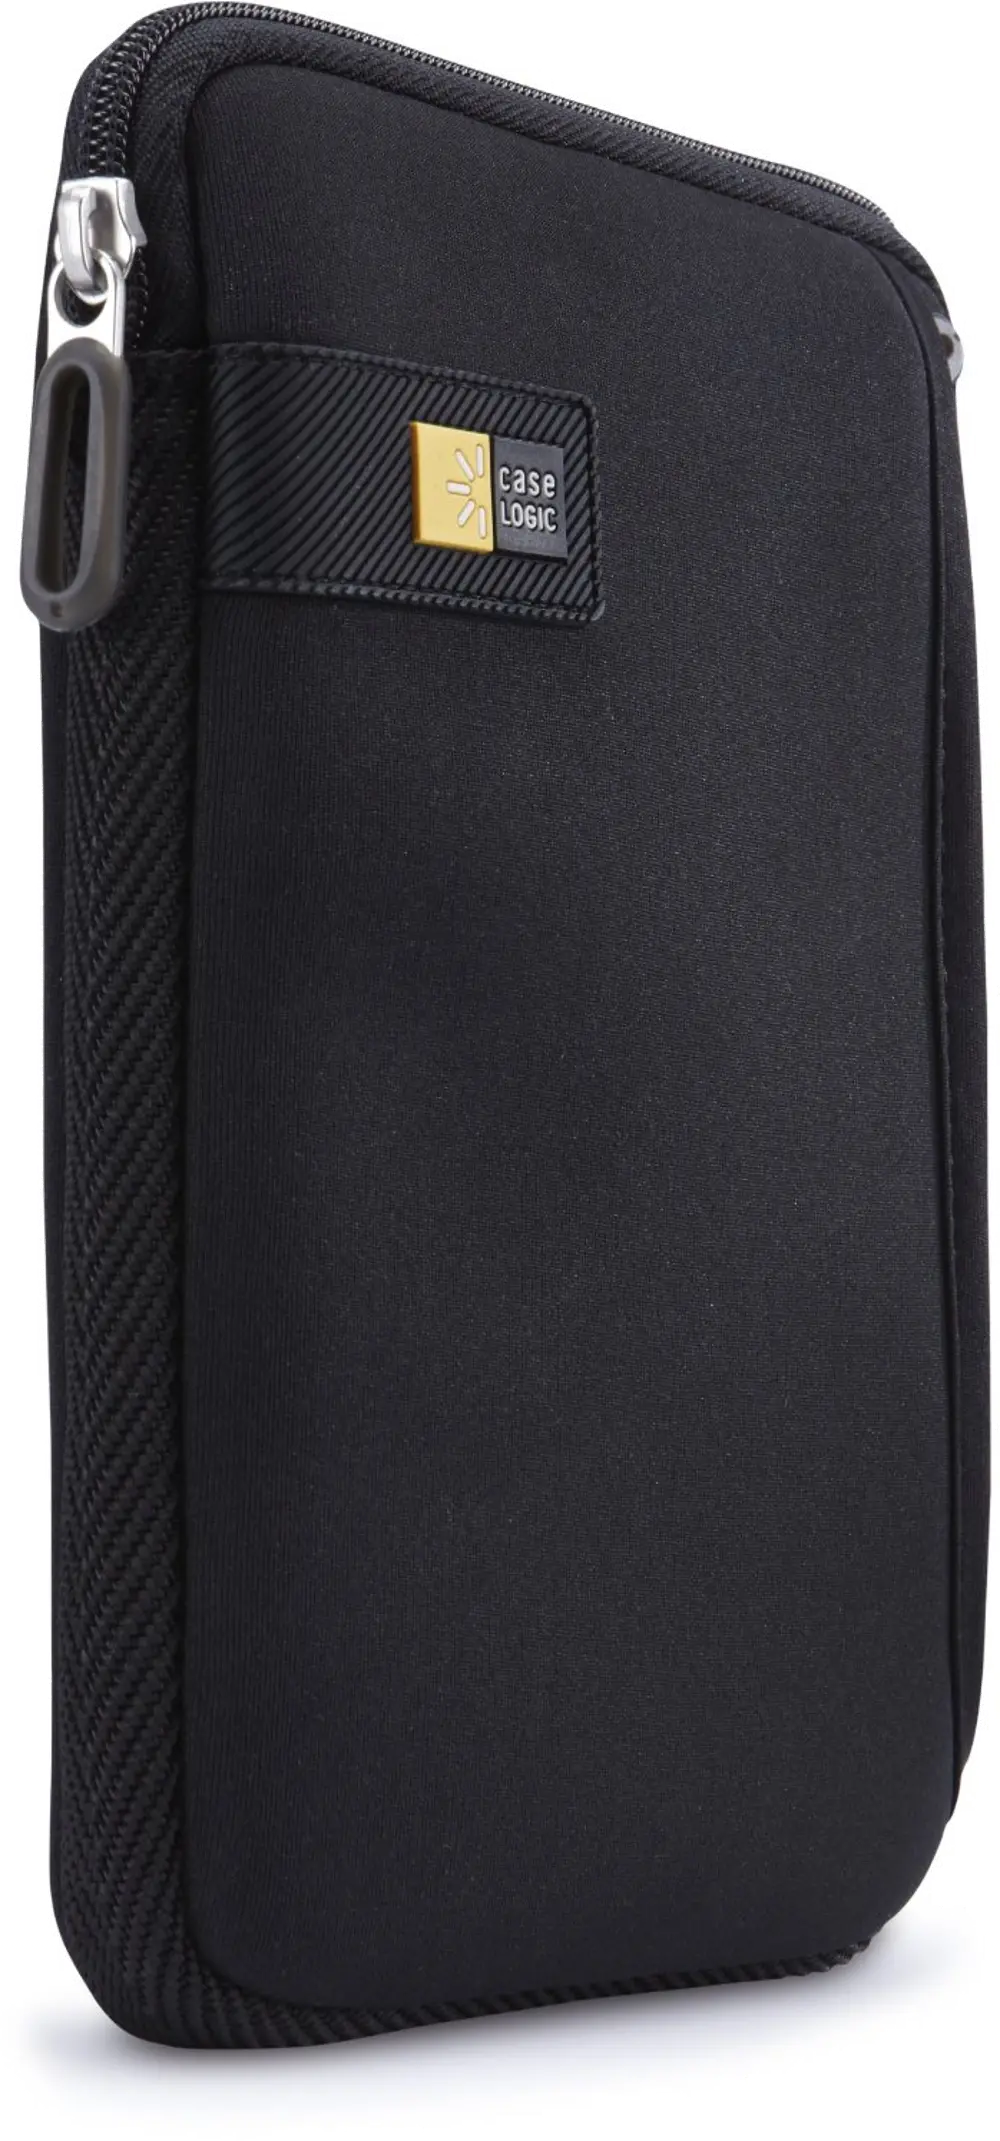 TNEO10 Case Logic iPad Mini/ 7 Inch Tablet Sleeve with Pocket - Black-1